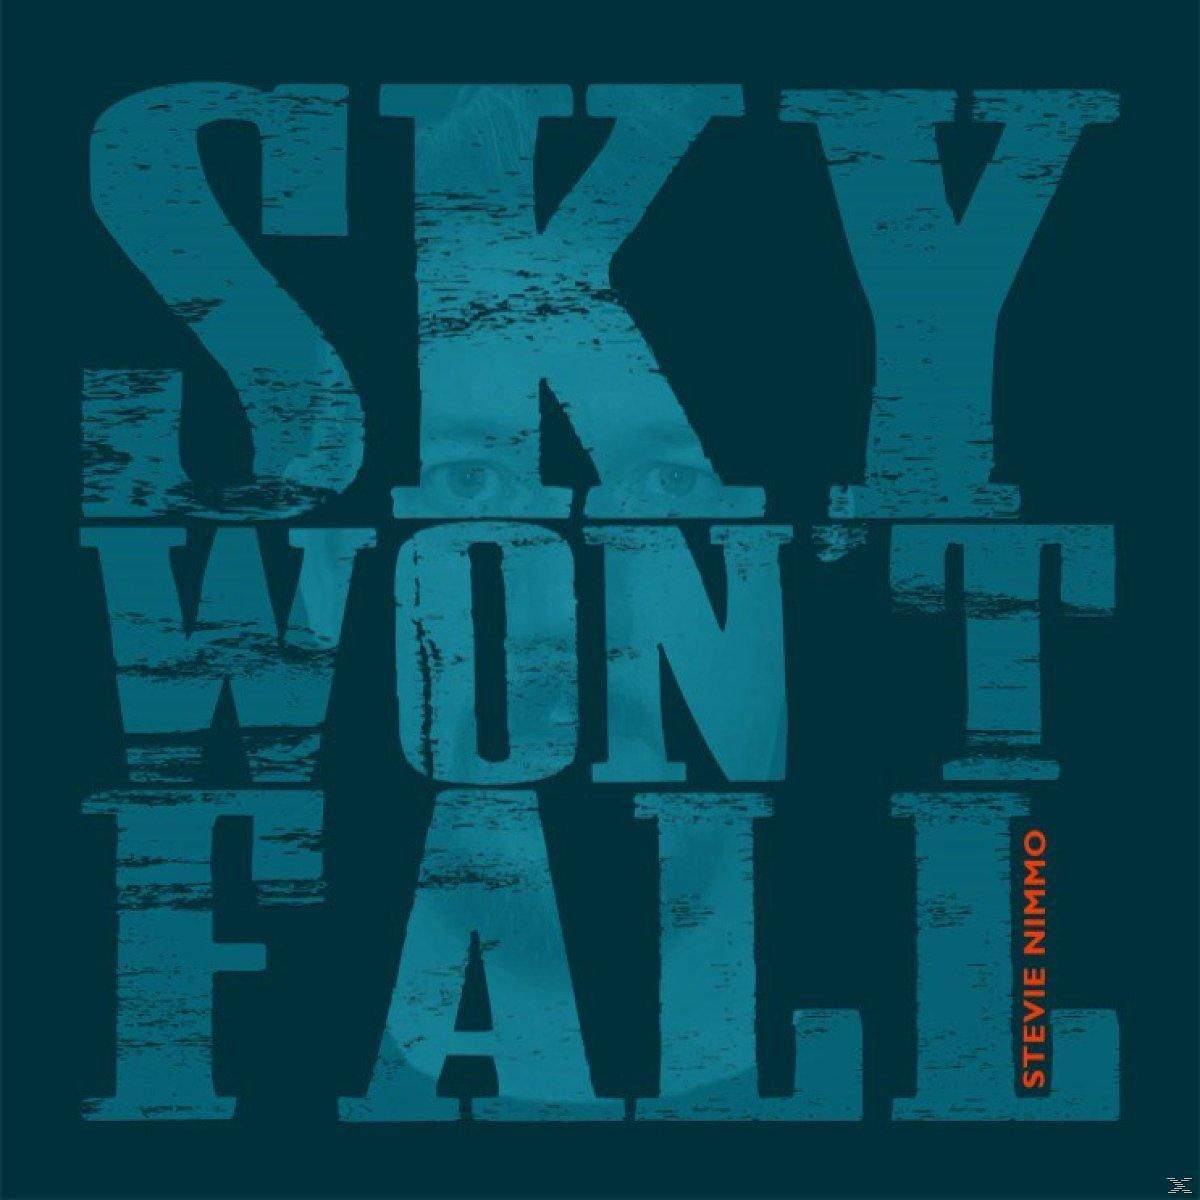 Stevie Nimmo - Won\'t Fall - Sky (CD)